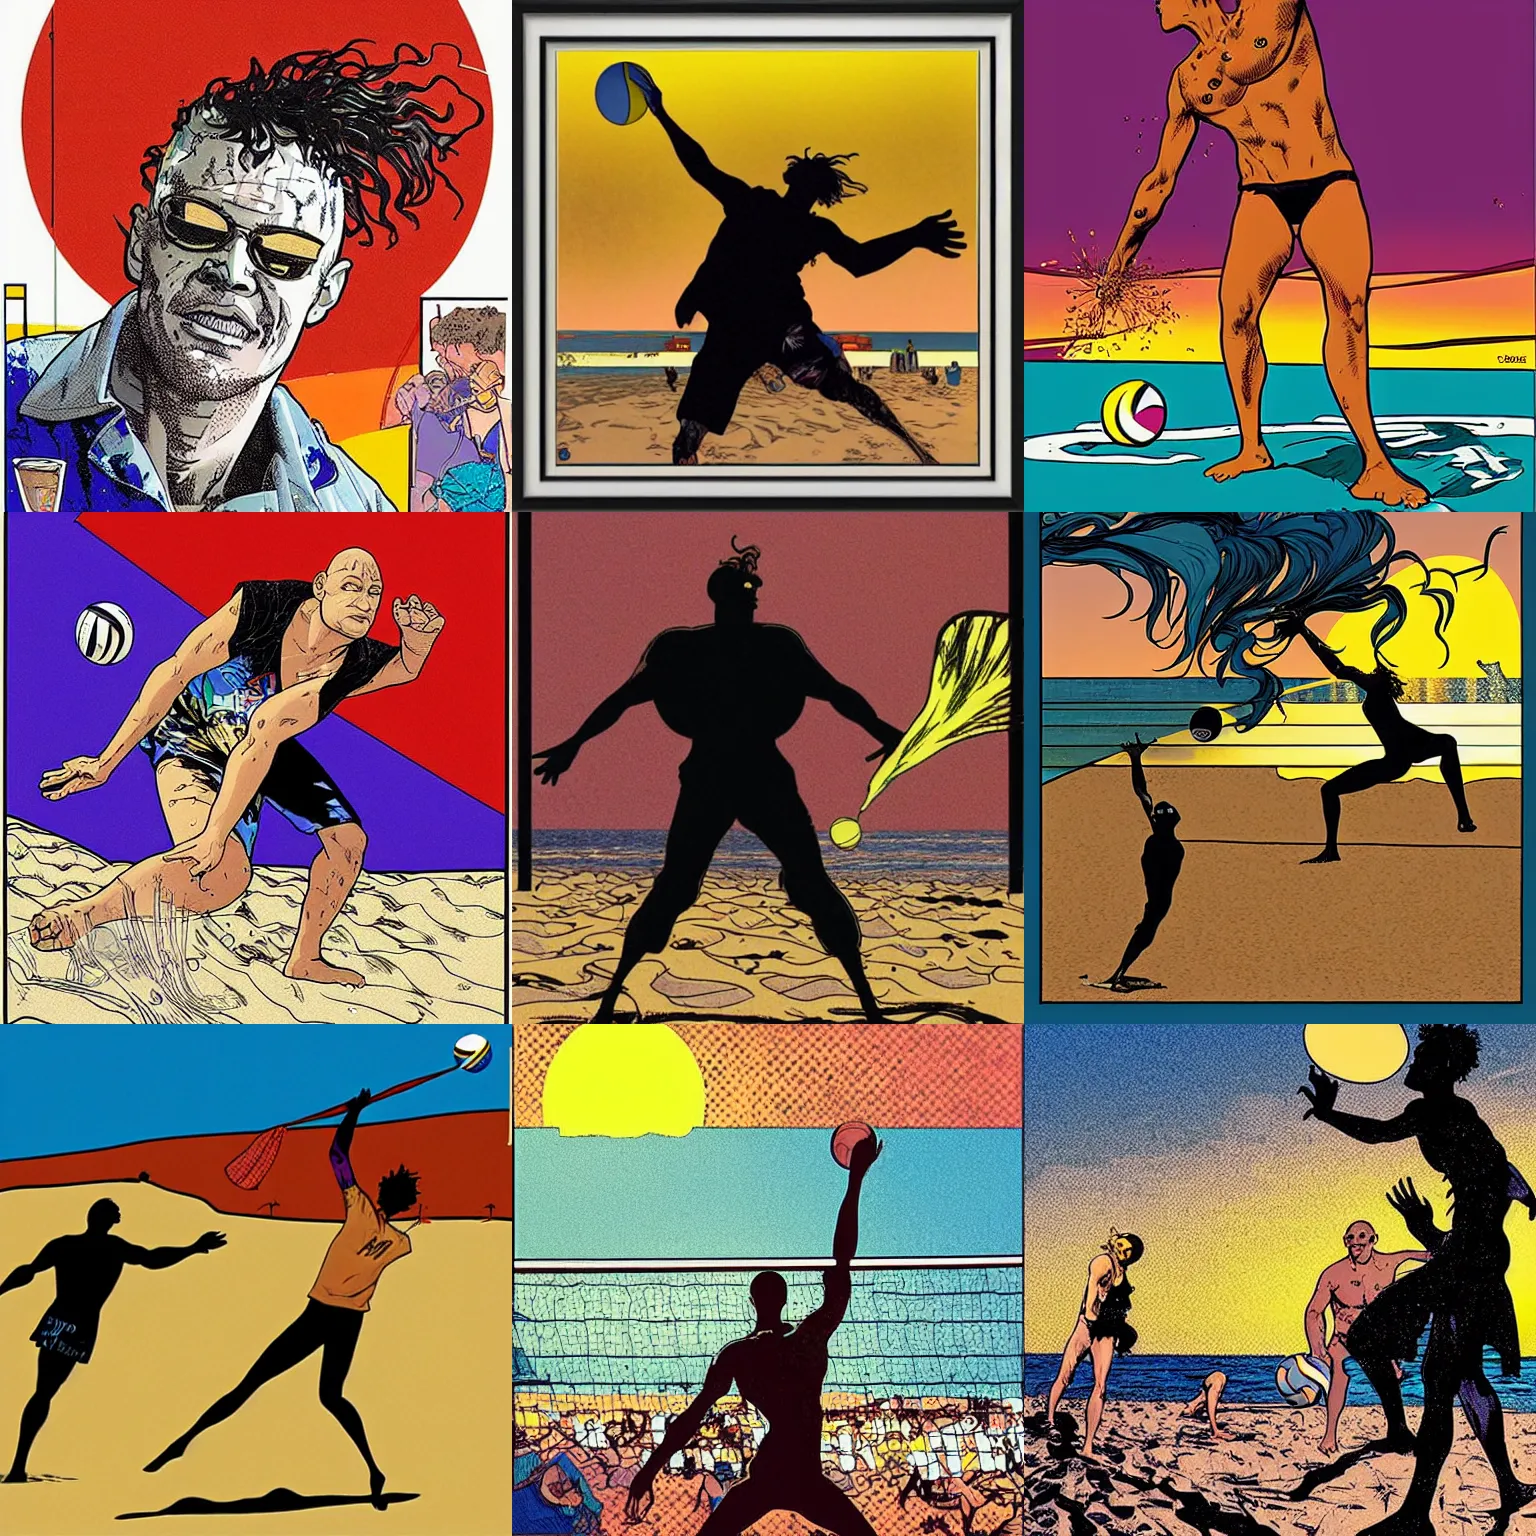 Prompt: morpheus from the sandman playing beach volleyball at sunset, long shadows, pop art, splash painting, art by geof darrow, ashley wood, alphonse mucha